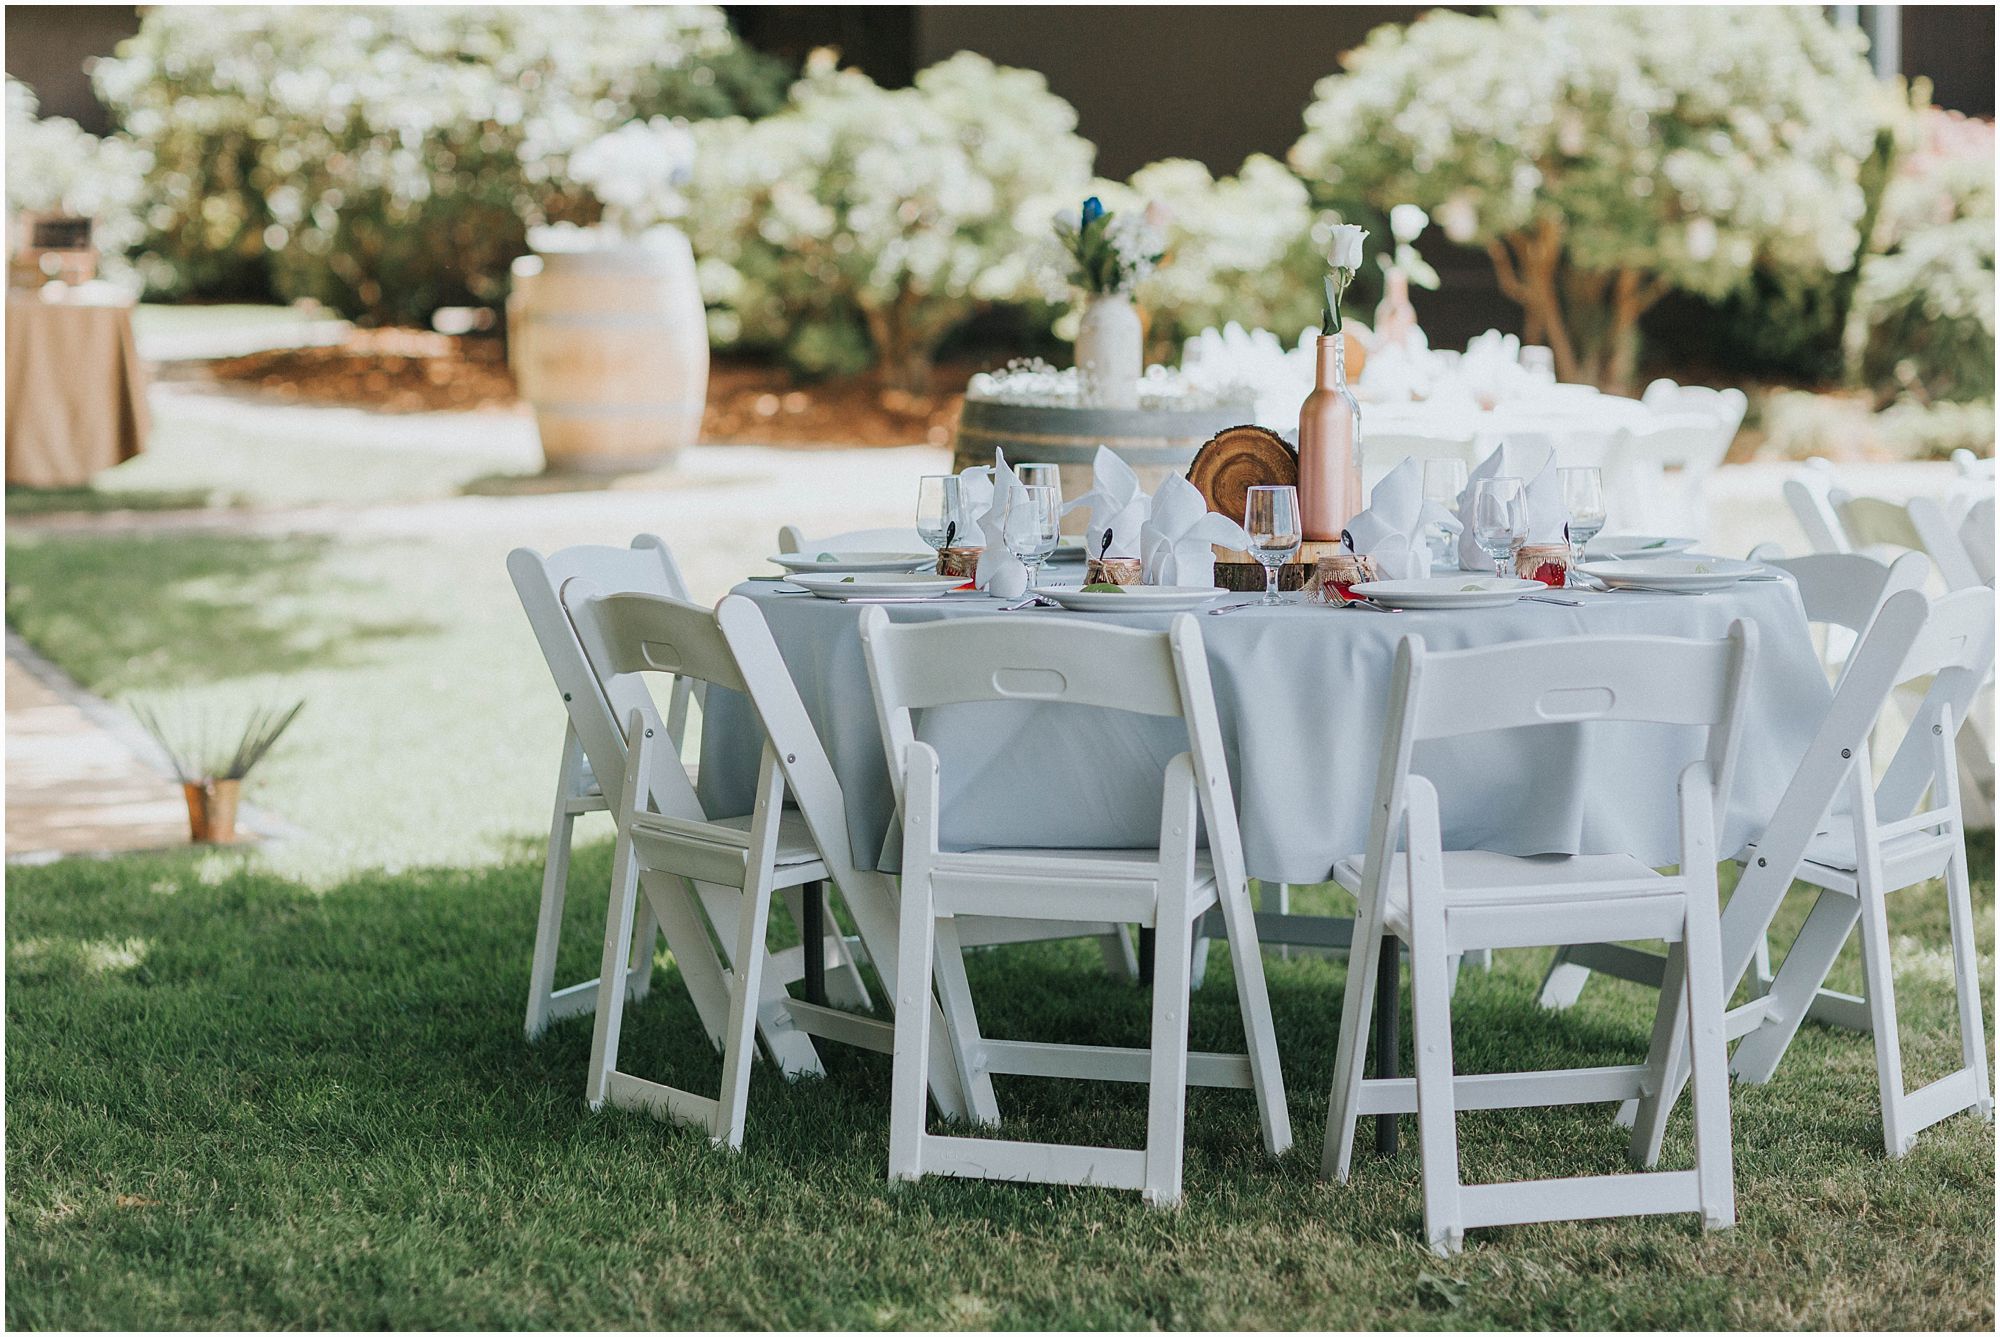 wedding decor - table set up in backyard wedding 